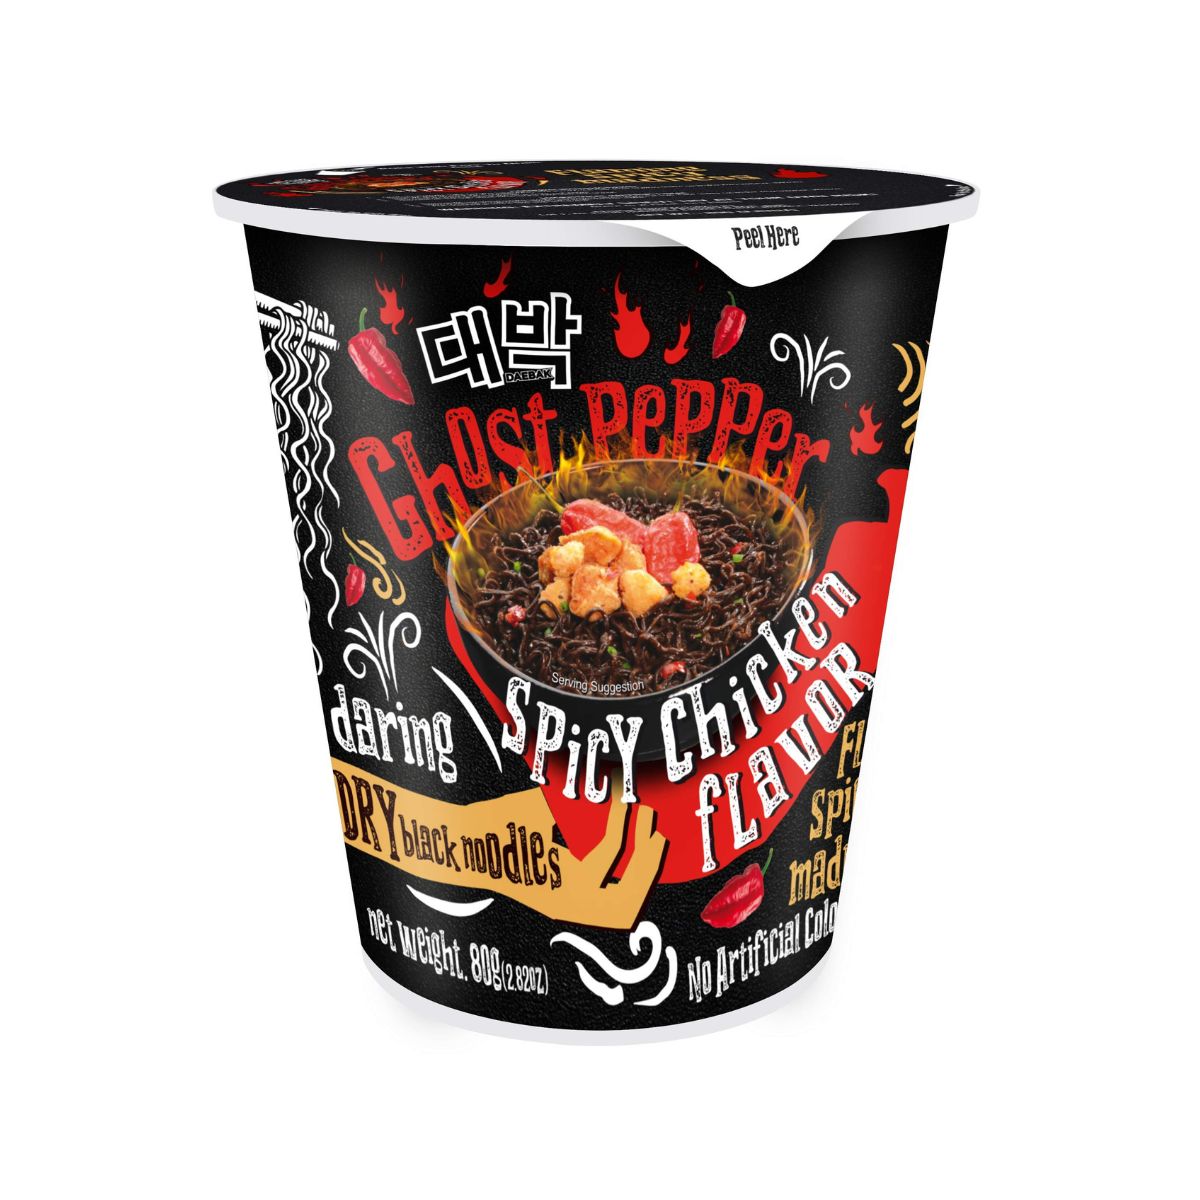 Daebak Ghost pepper Dry Black Noodles - Cup Noodles - 80g